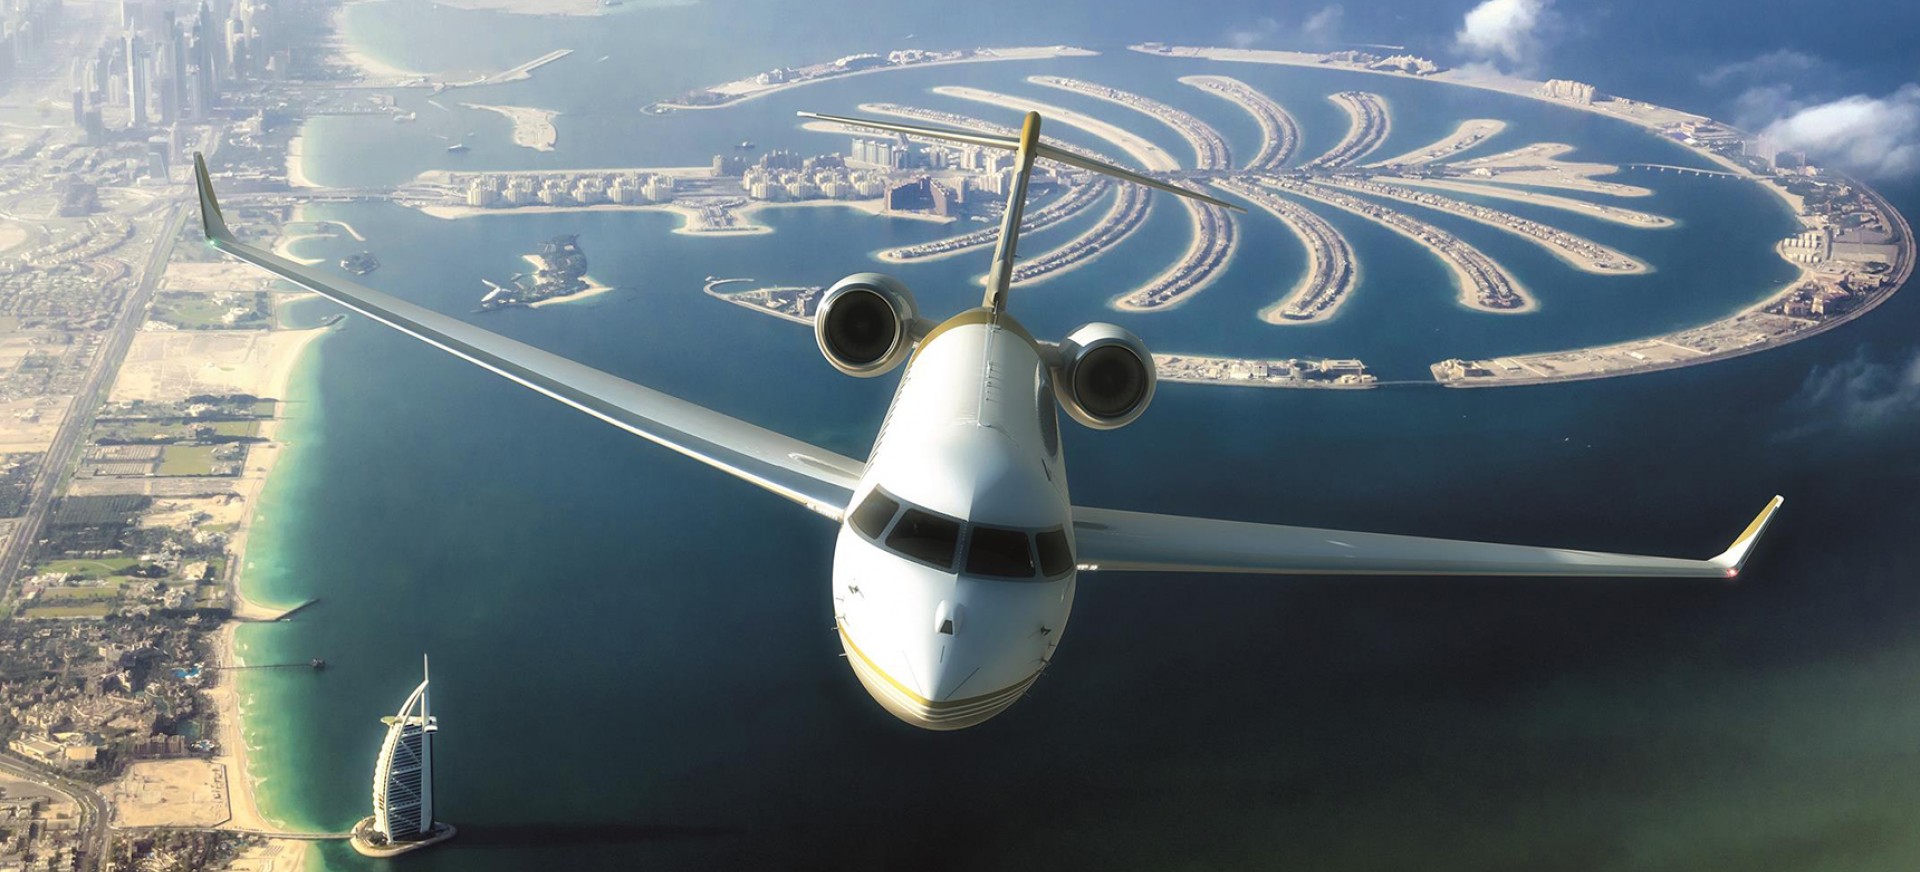 Bombardier business aircraft - Dubai Air Show